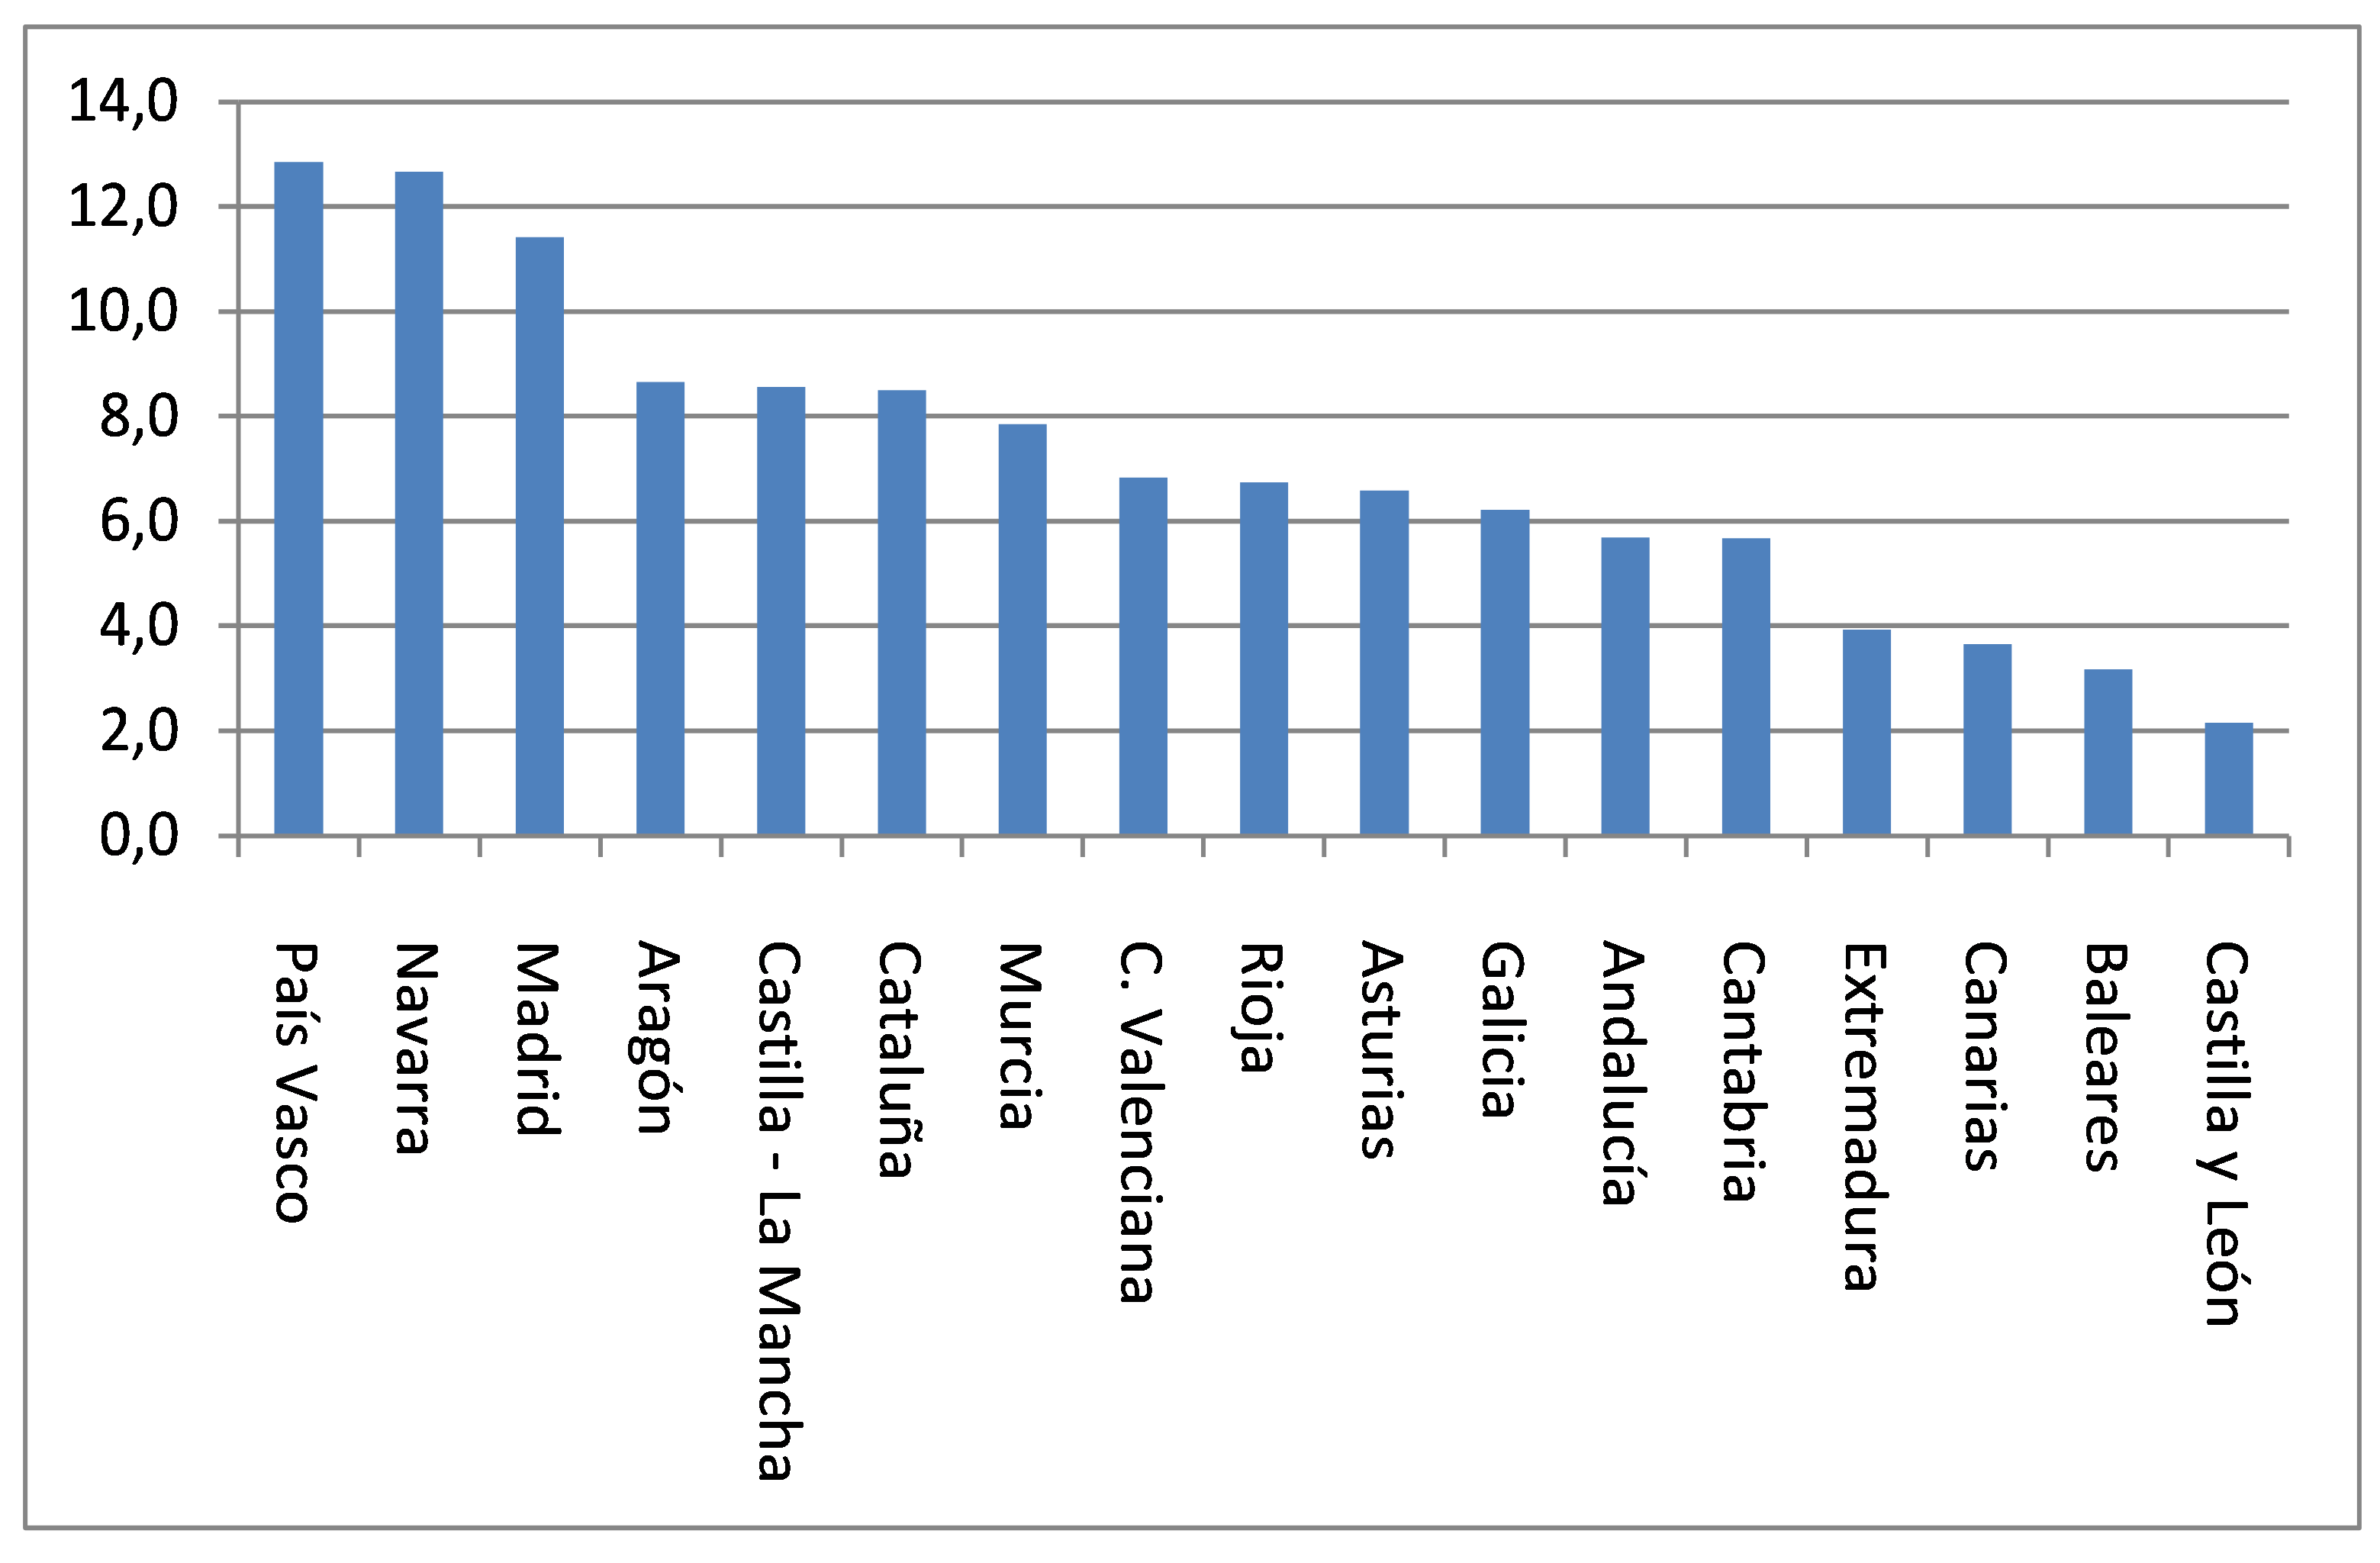  Gráfico 2. Investigadores en I+D en por Comunidades Autónomas en % (2011)